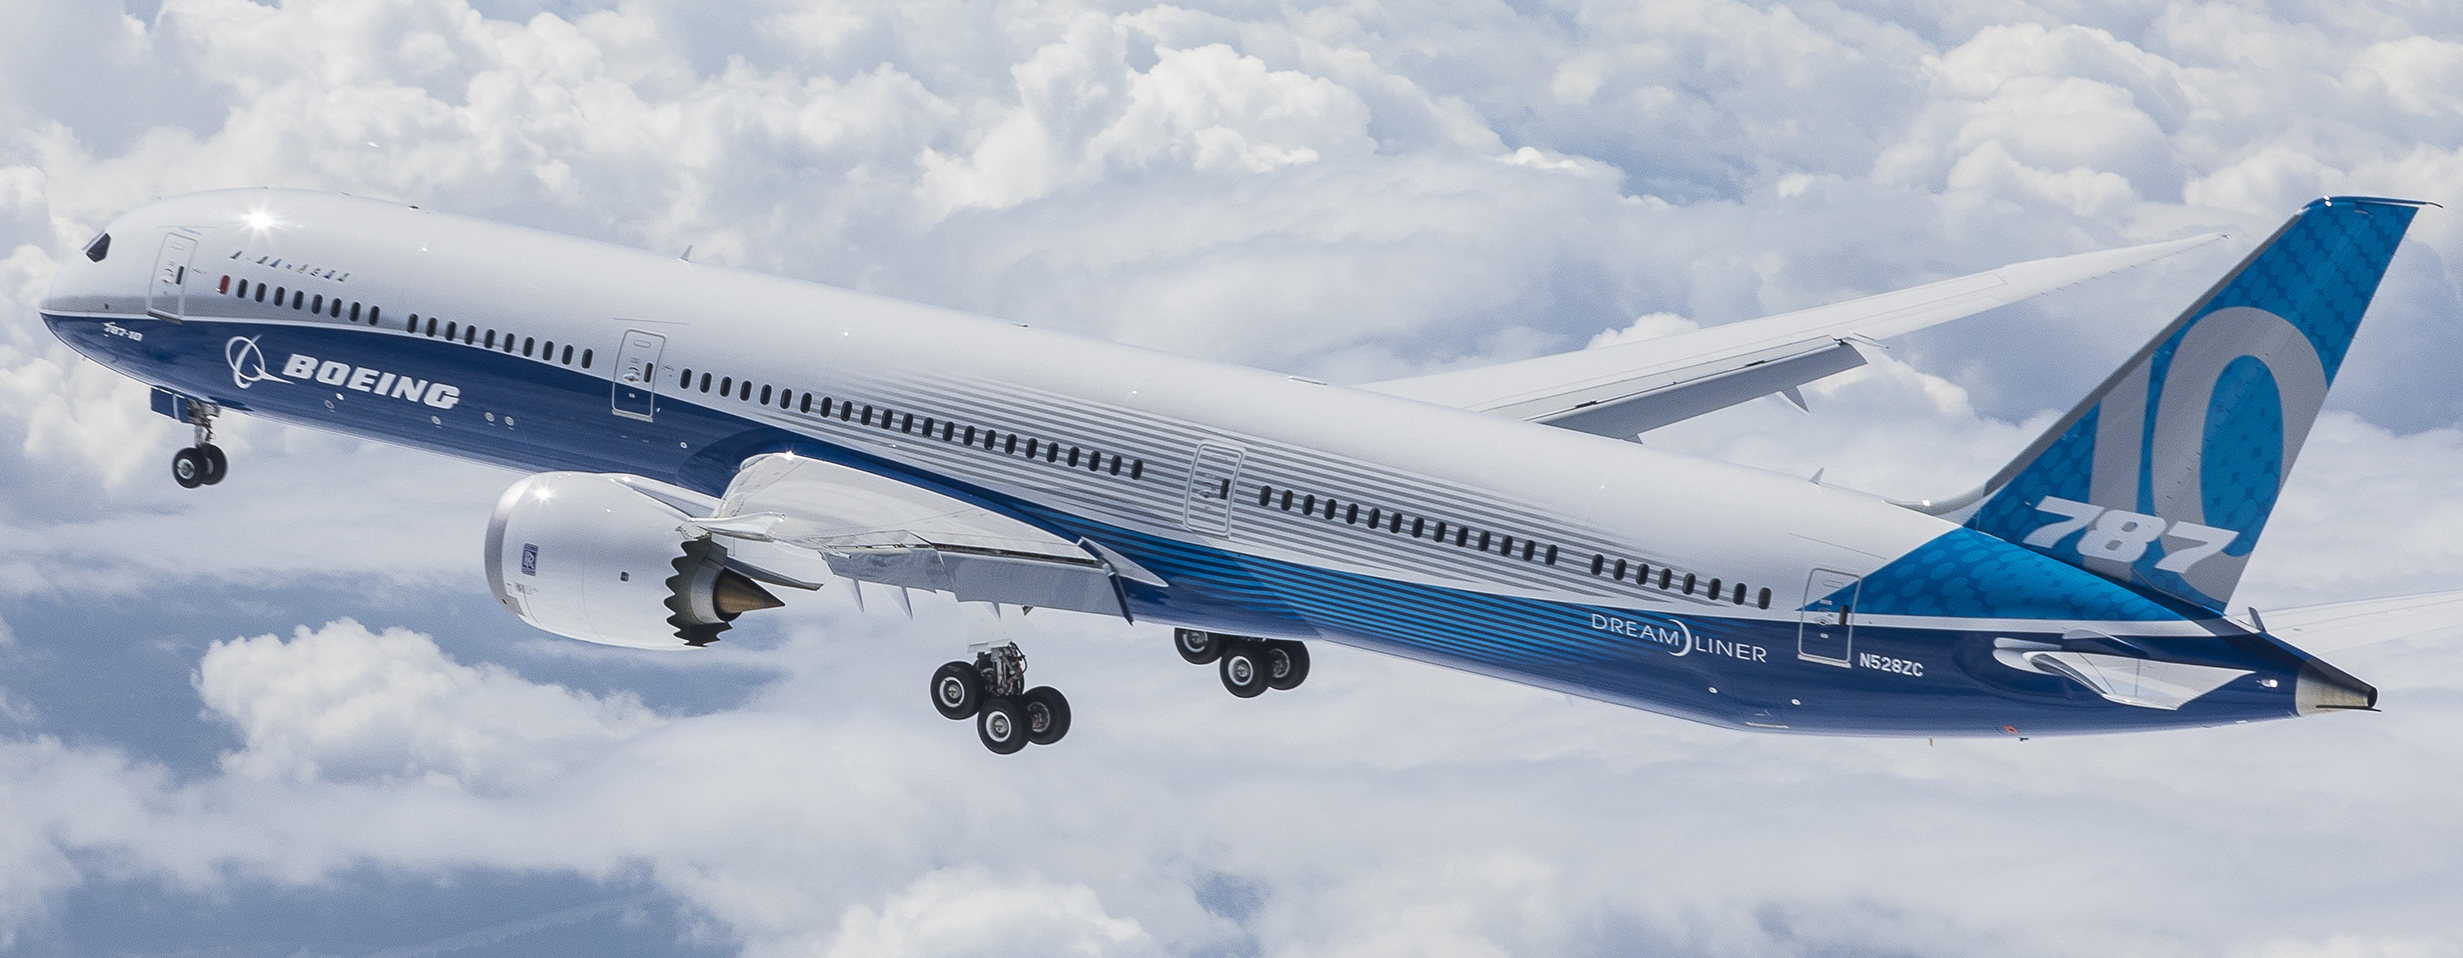 Boeing-787-10-Dreamliner-air-europa.jpg